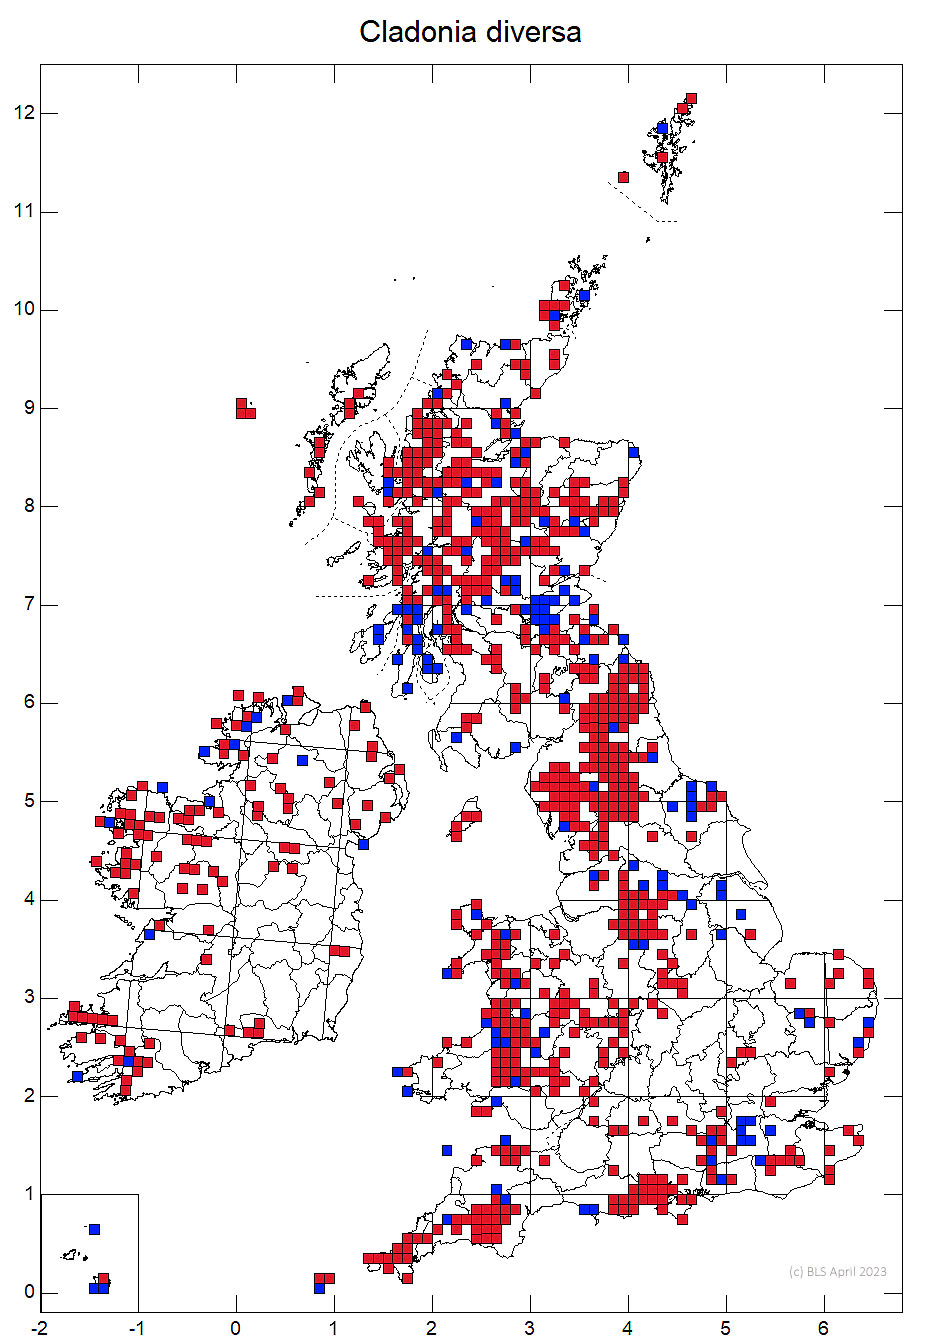 Cladonia diversa 10km sq distribution map